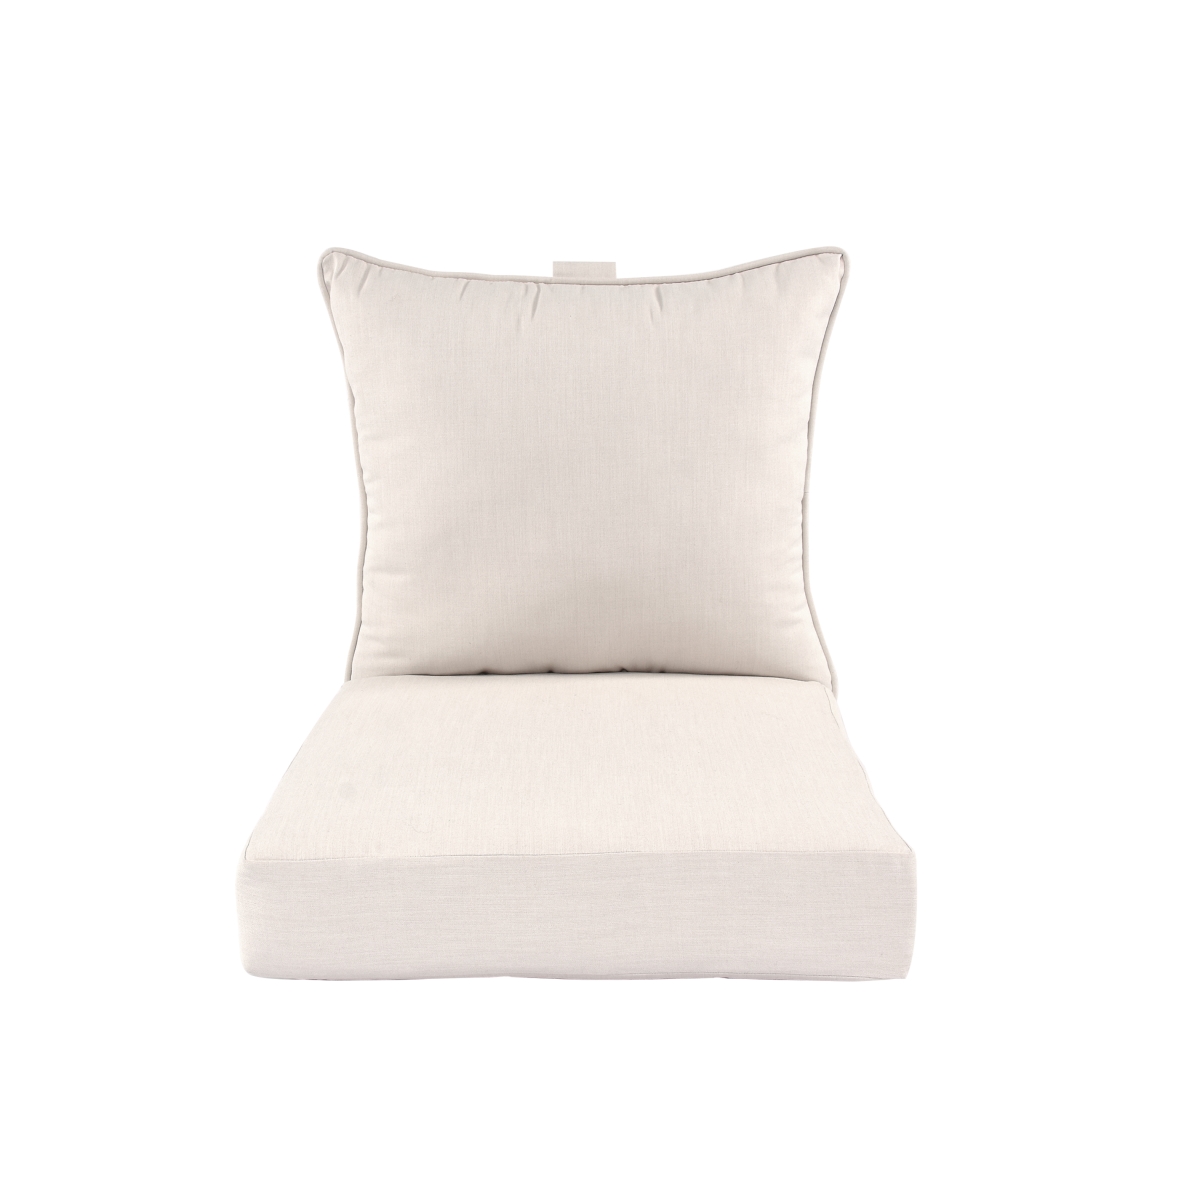 Cuds46-sda53 46.5 X 24 In. Pacifica Premium Deep Seat Lounge Cushion In Sand